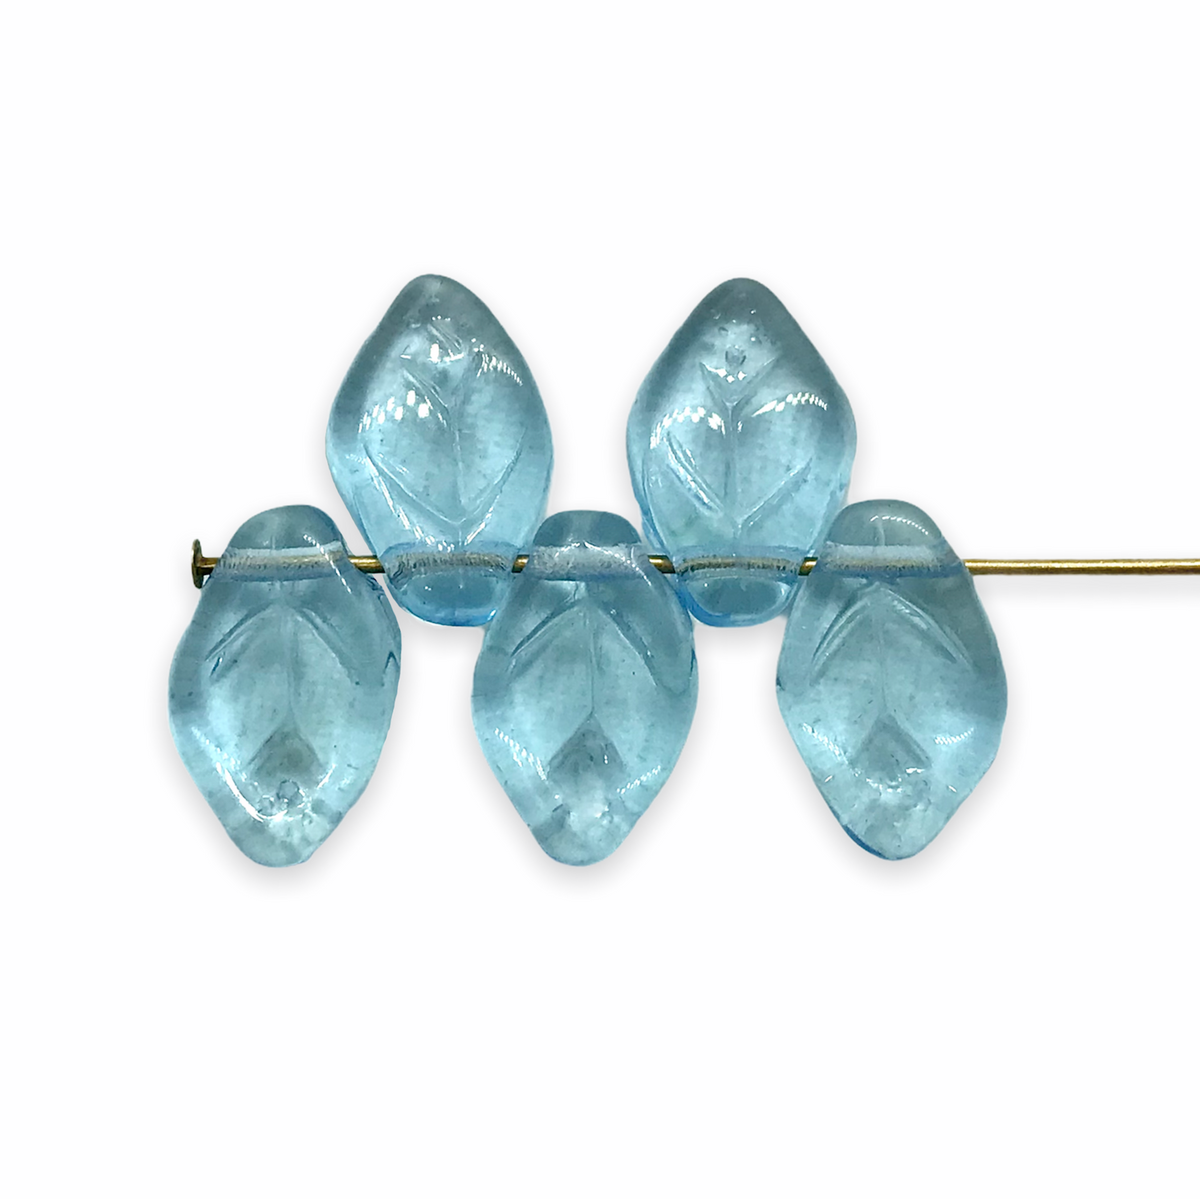 Czech glass leaf beads 25pc translucent light green blue gold AB